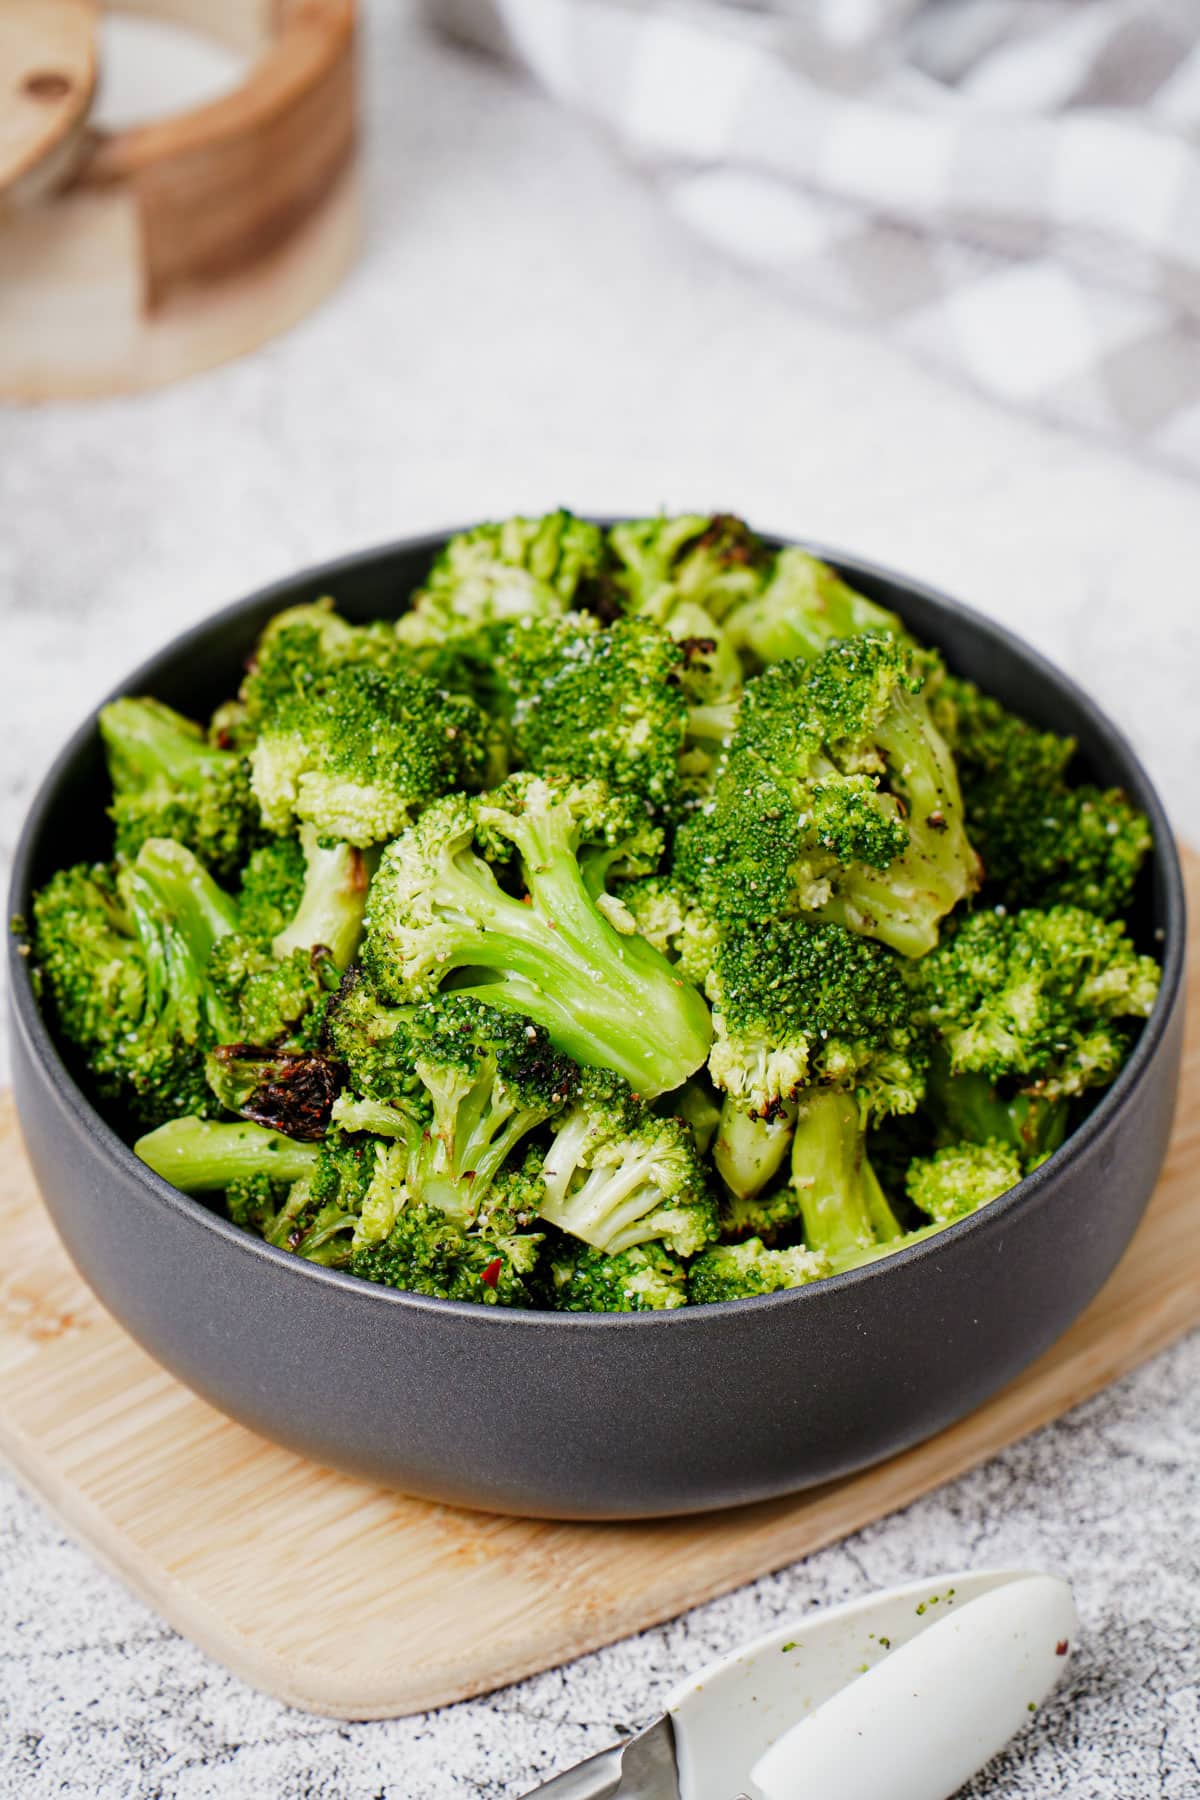 Air fryer frozen broccoli recipe bite shot served in a black bowl.